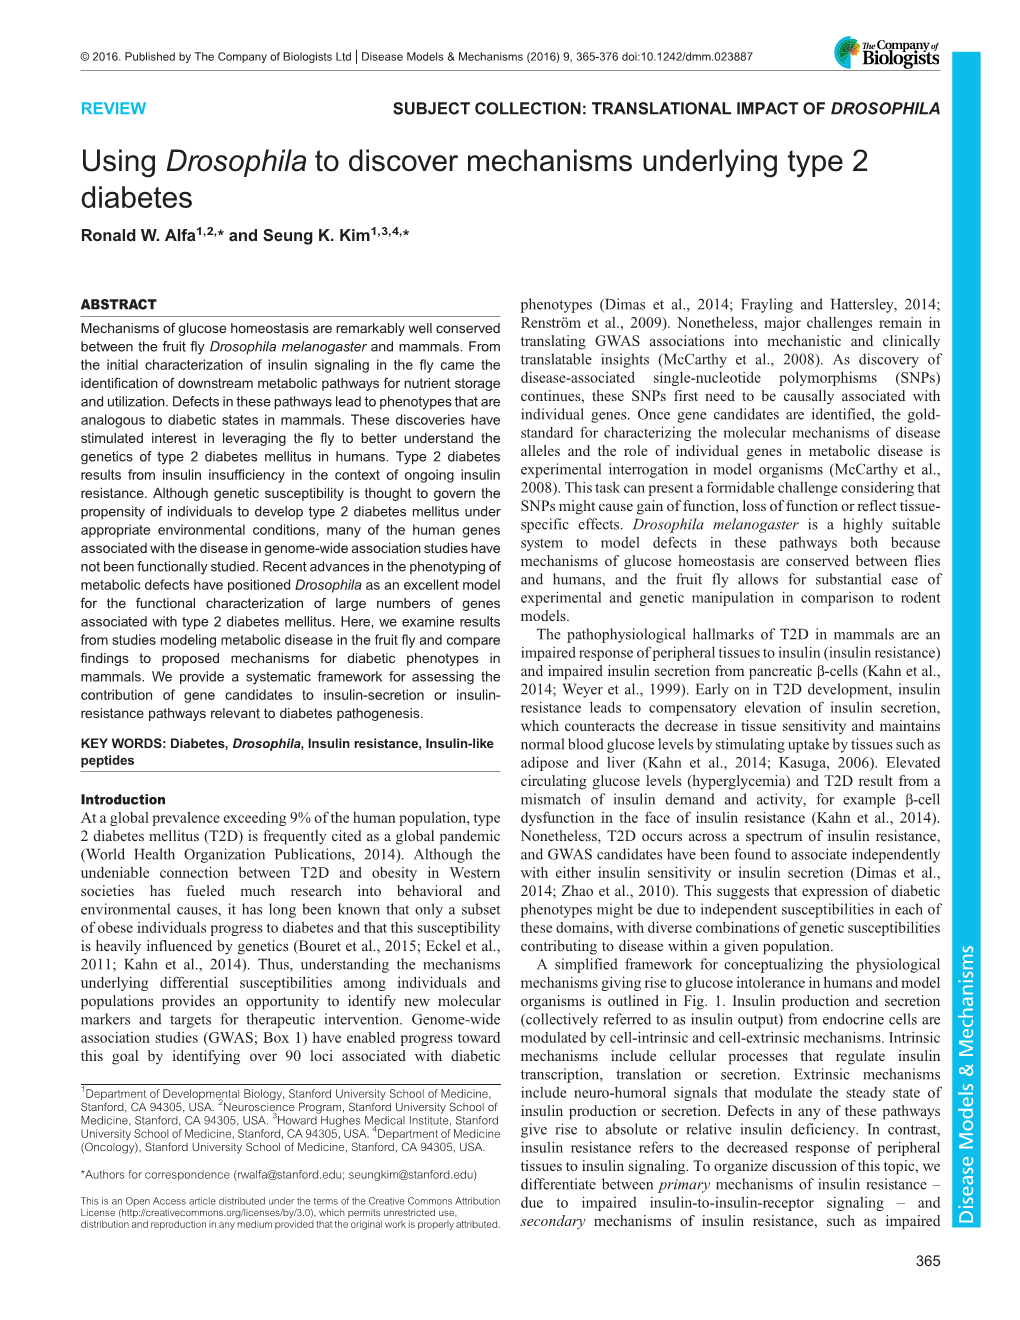 Using Drosophila to Discover Mechanisms Underlying Type 2 Diabetes Ronald W